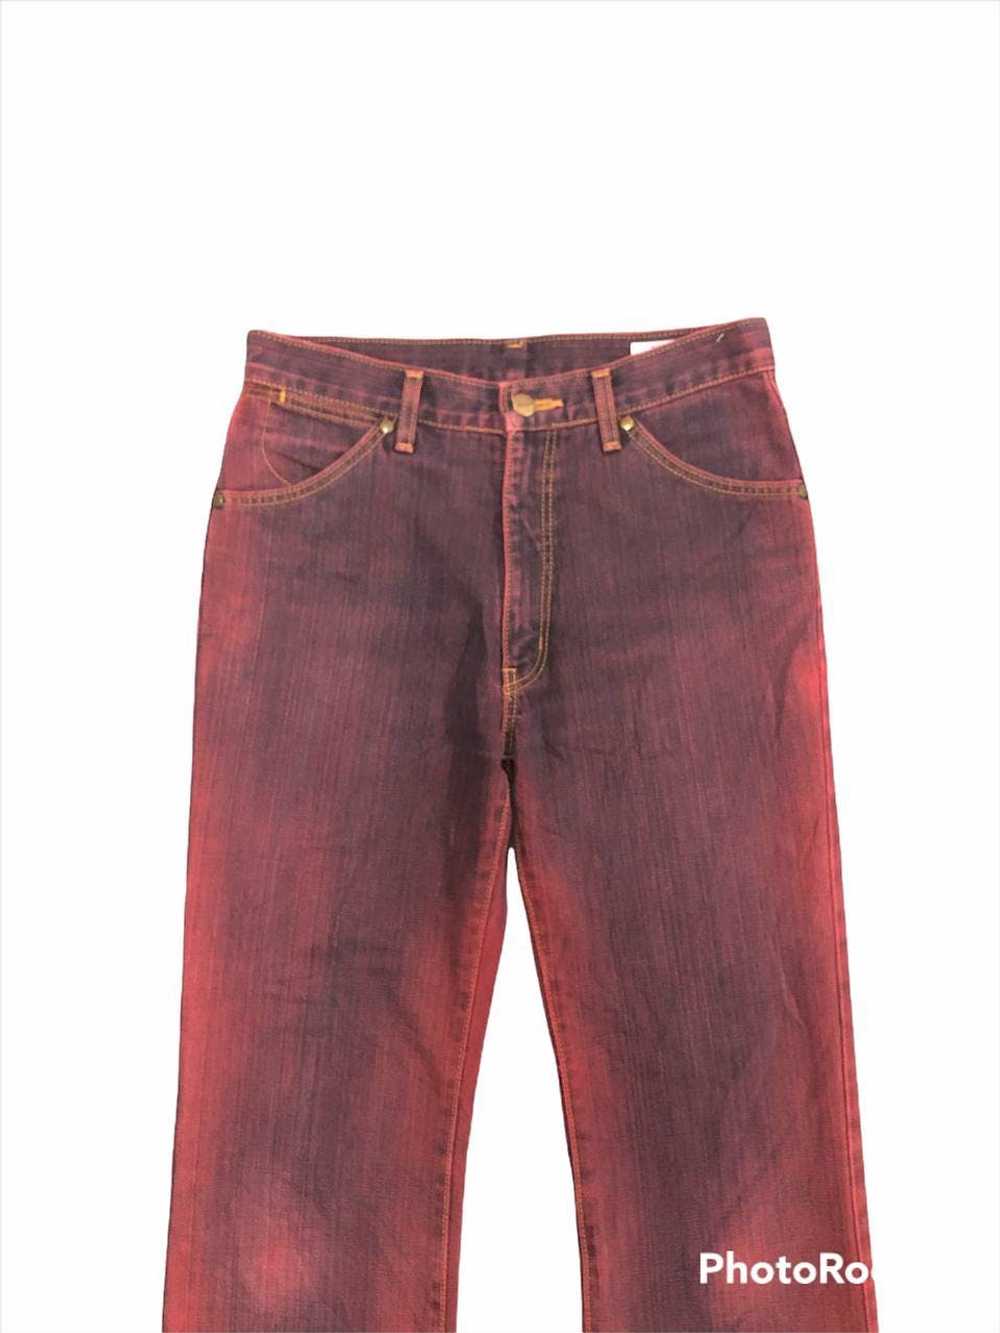 Vintage Wrangler Faded Marron Denim Pants - image 3